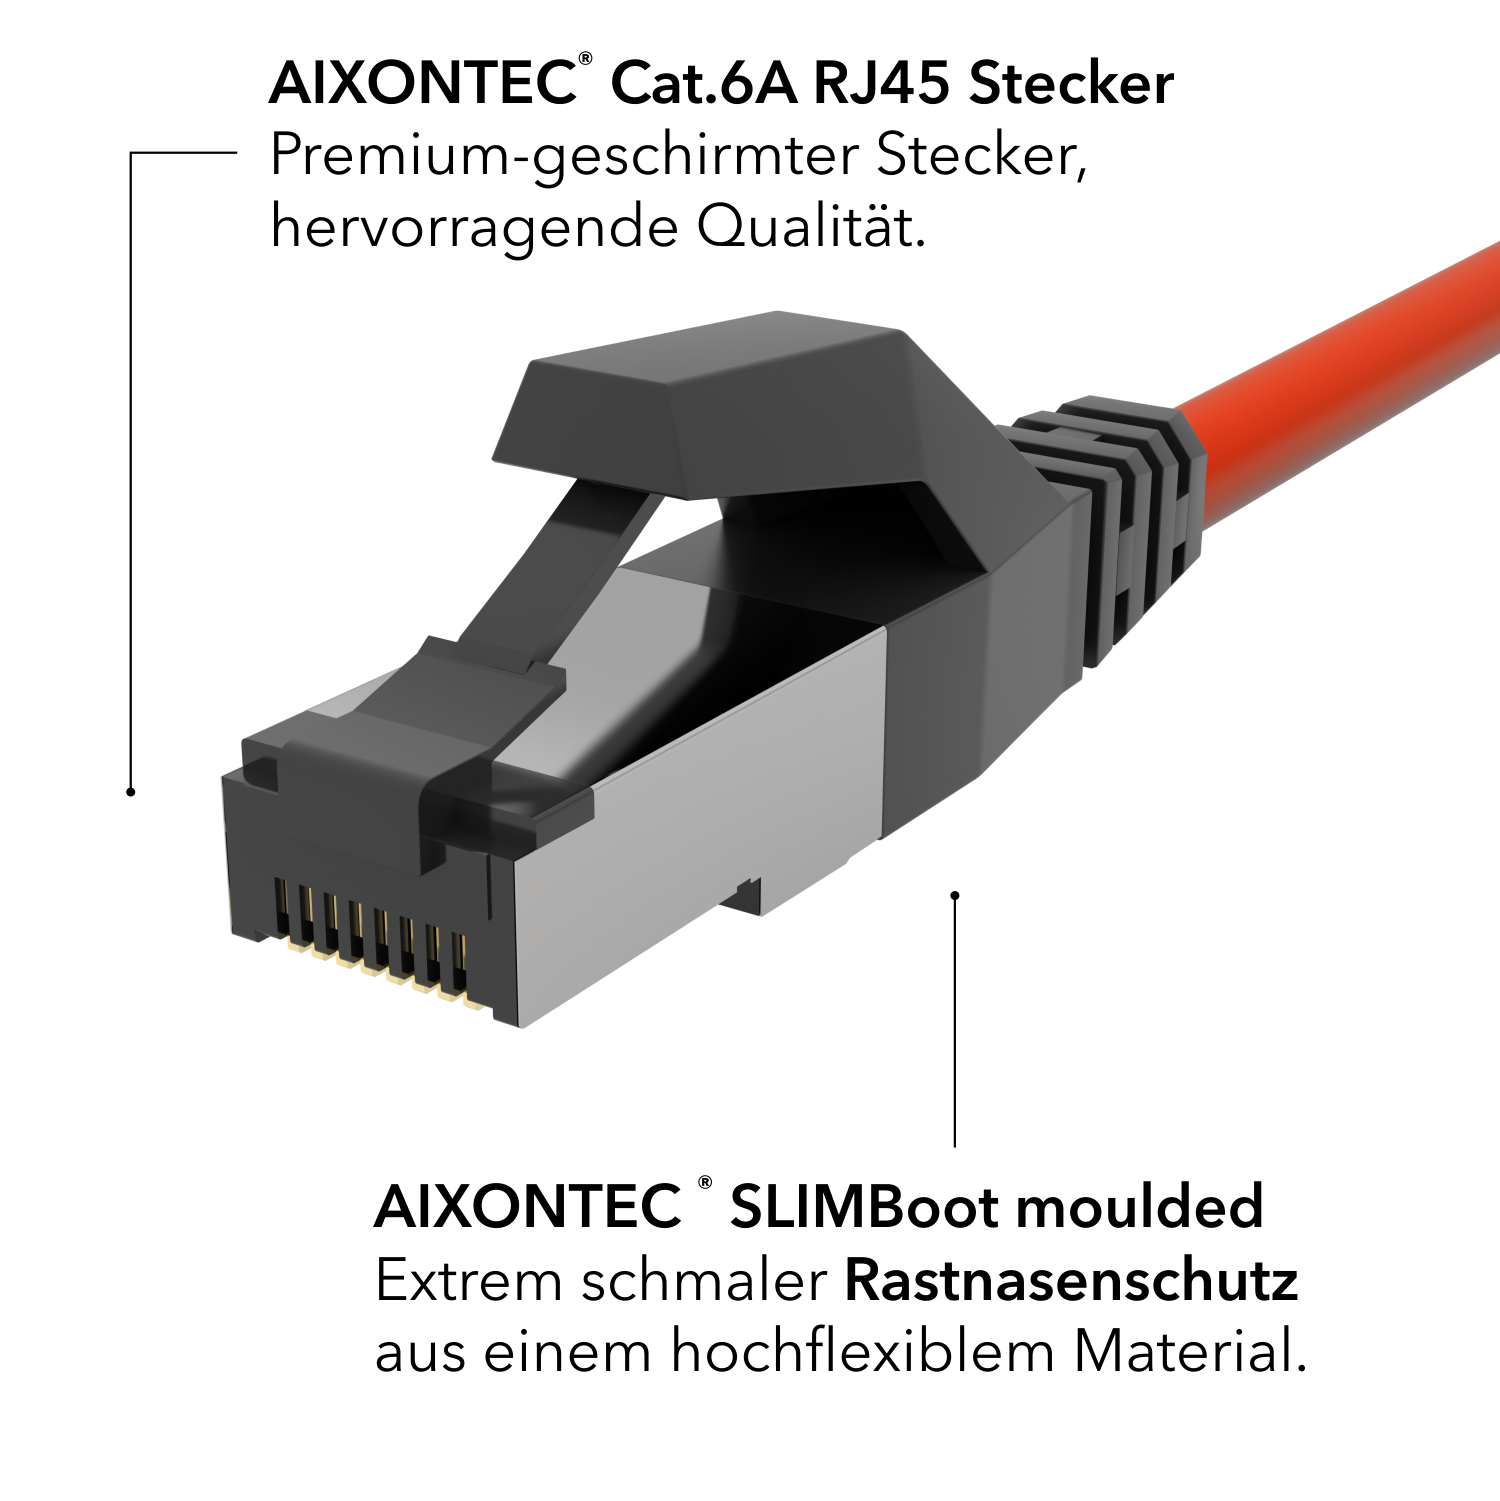 Ethernetkabel Lankabel 10 AIXONTEC Gigabit, m 6,0m UV-Beständig 6,0 Netzwerkkabel, RJ45 Outdoor